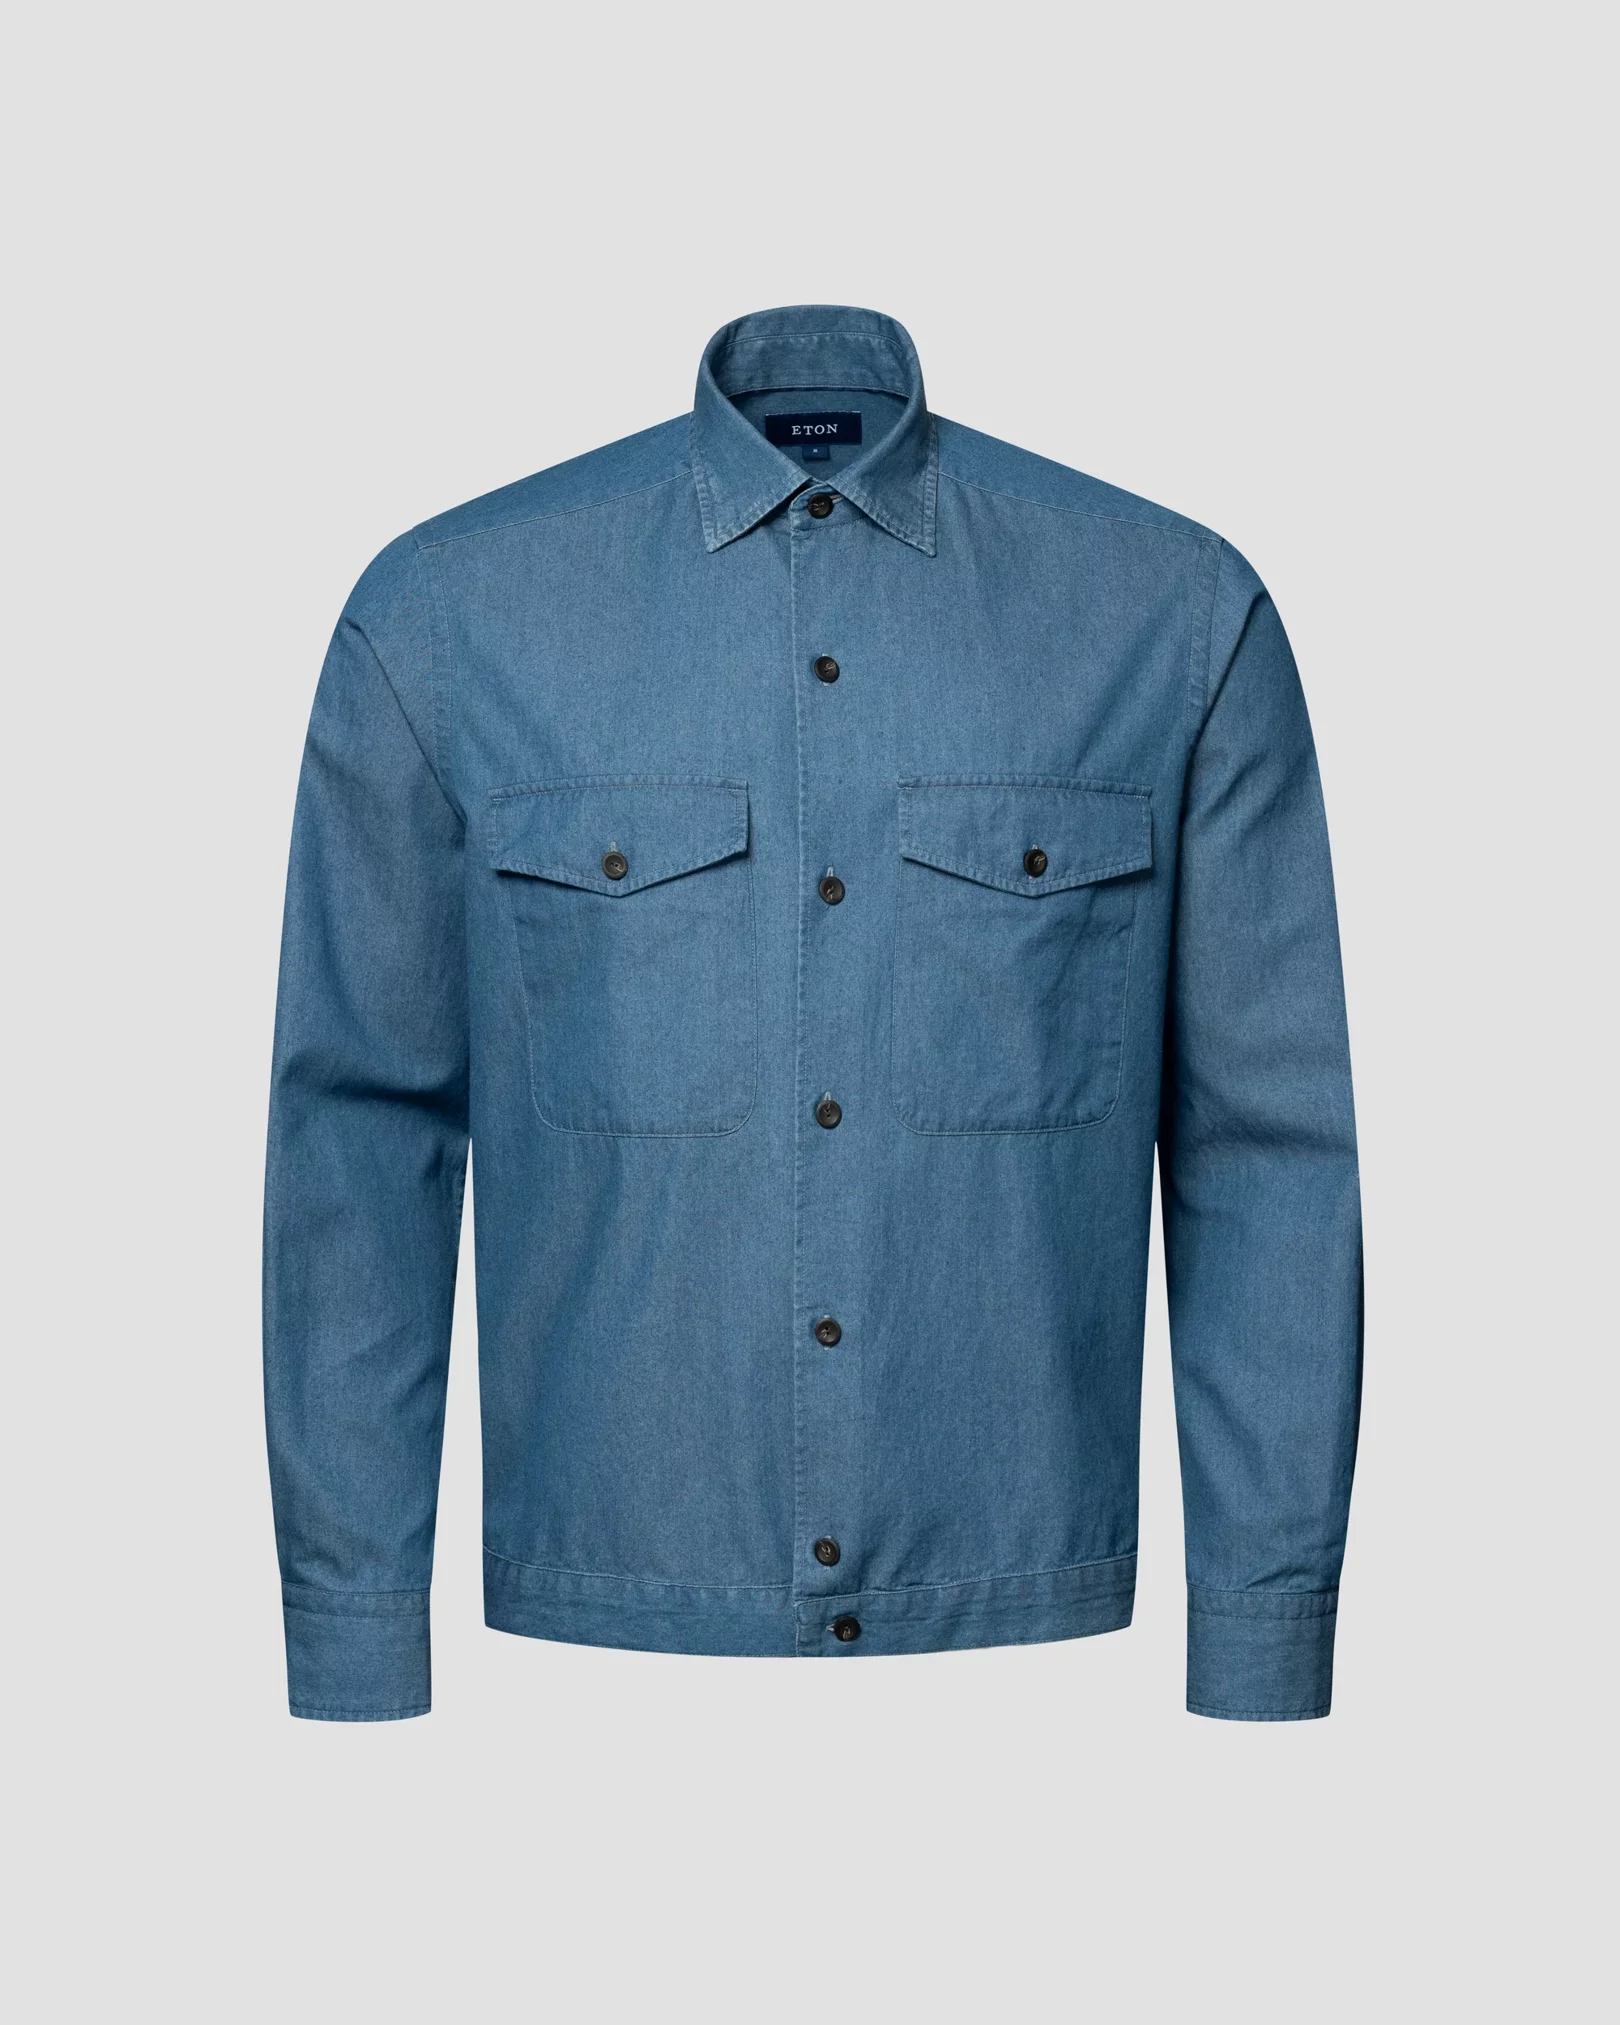 Eton - dark blue indigo shirt jacket